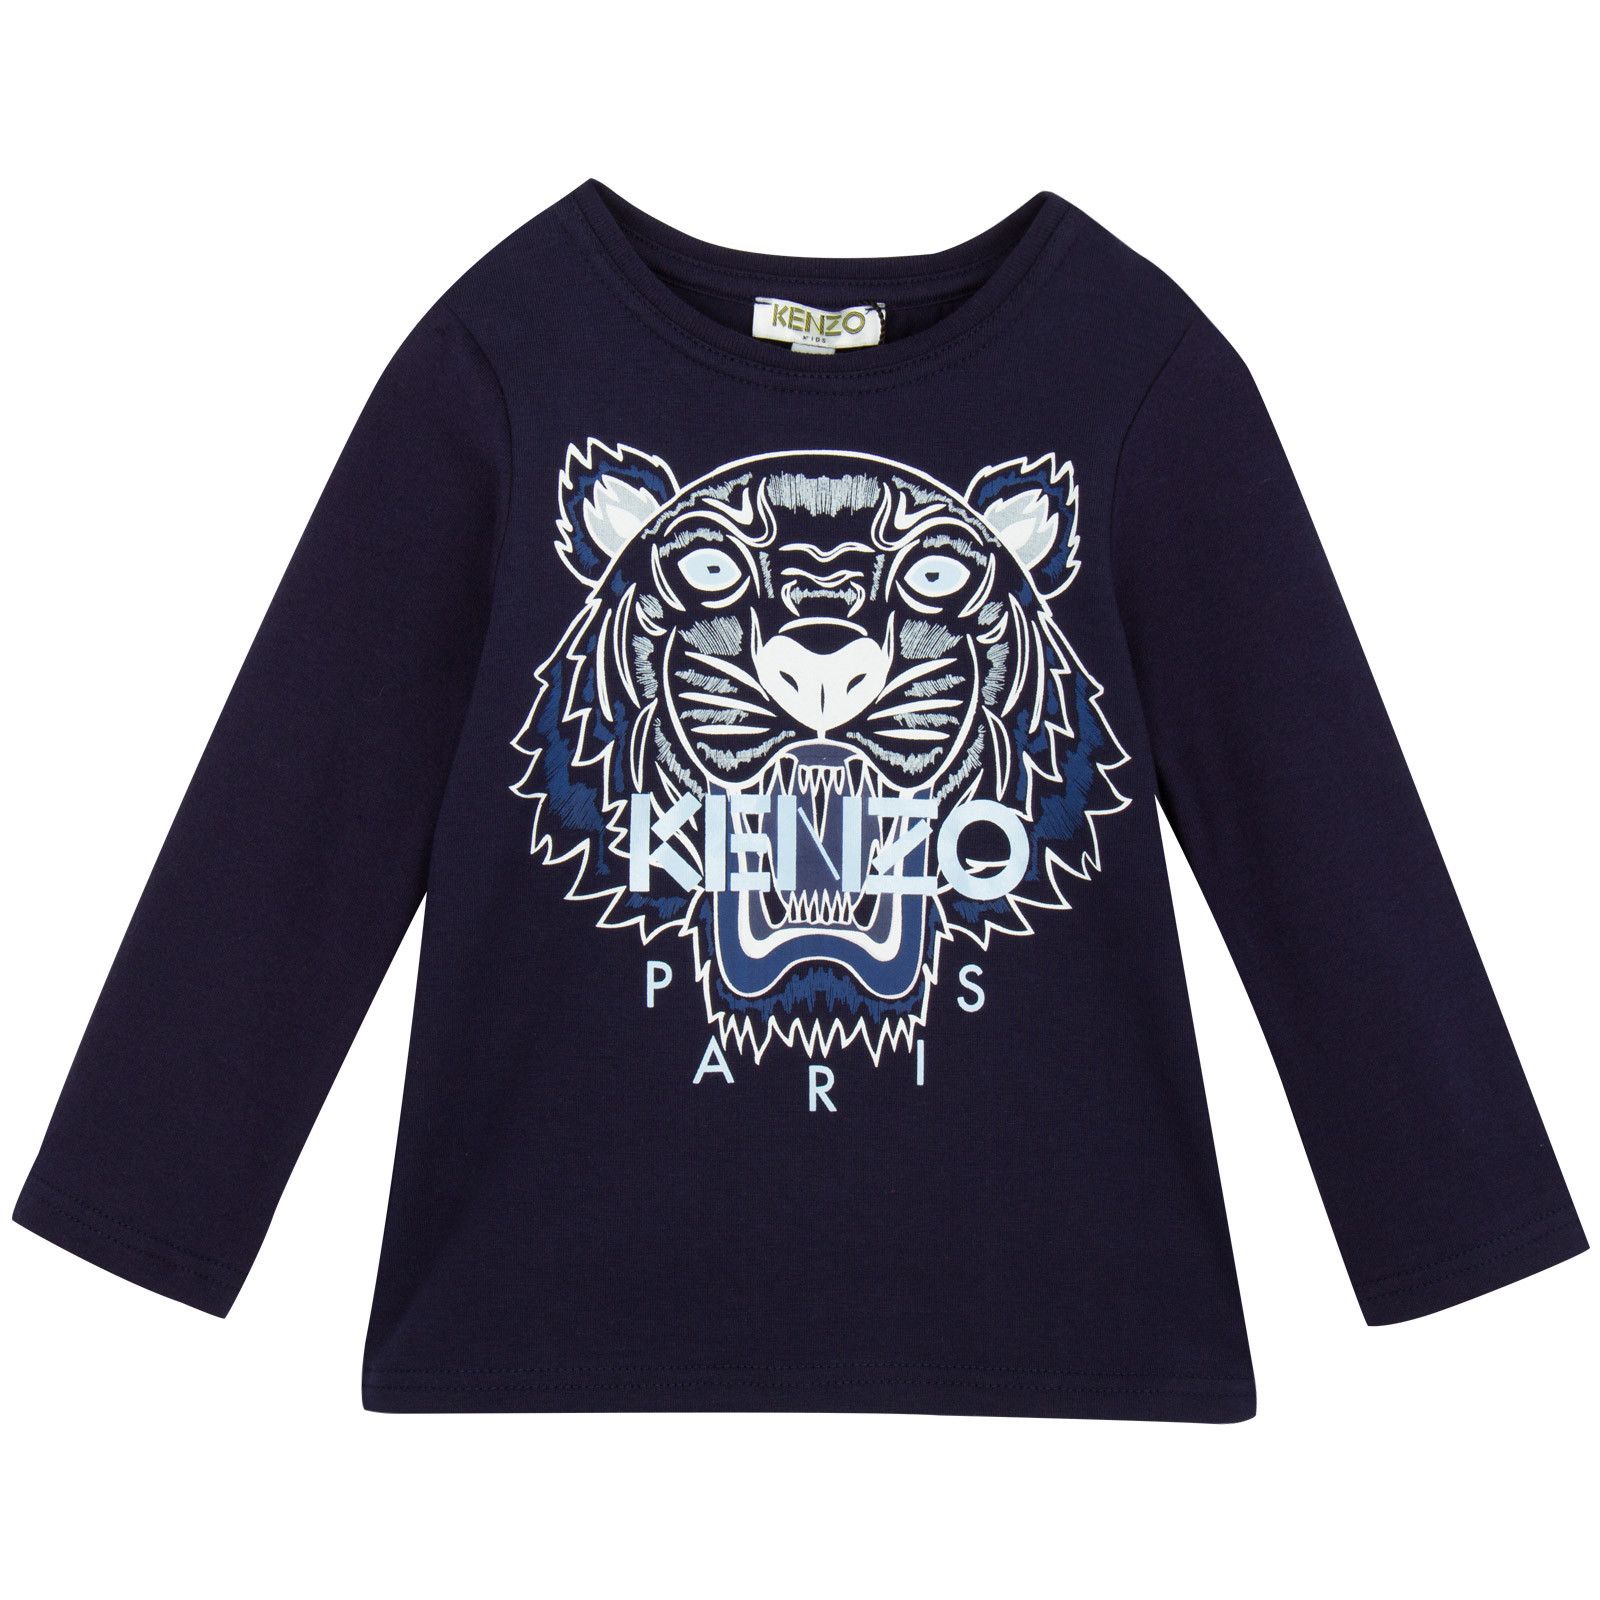 Girls Navy Blue Tiger Embroidered T-Shirt - CÉMAROSE | Children's Fashion Store - 1